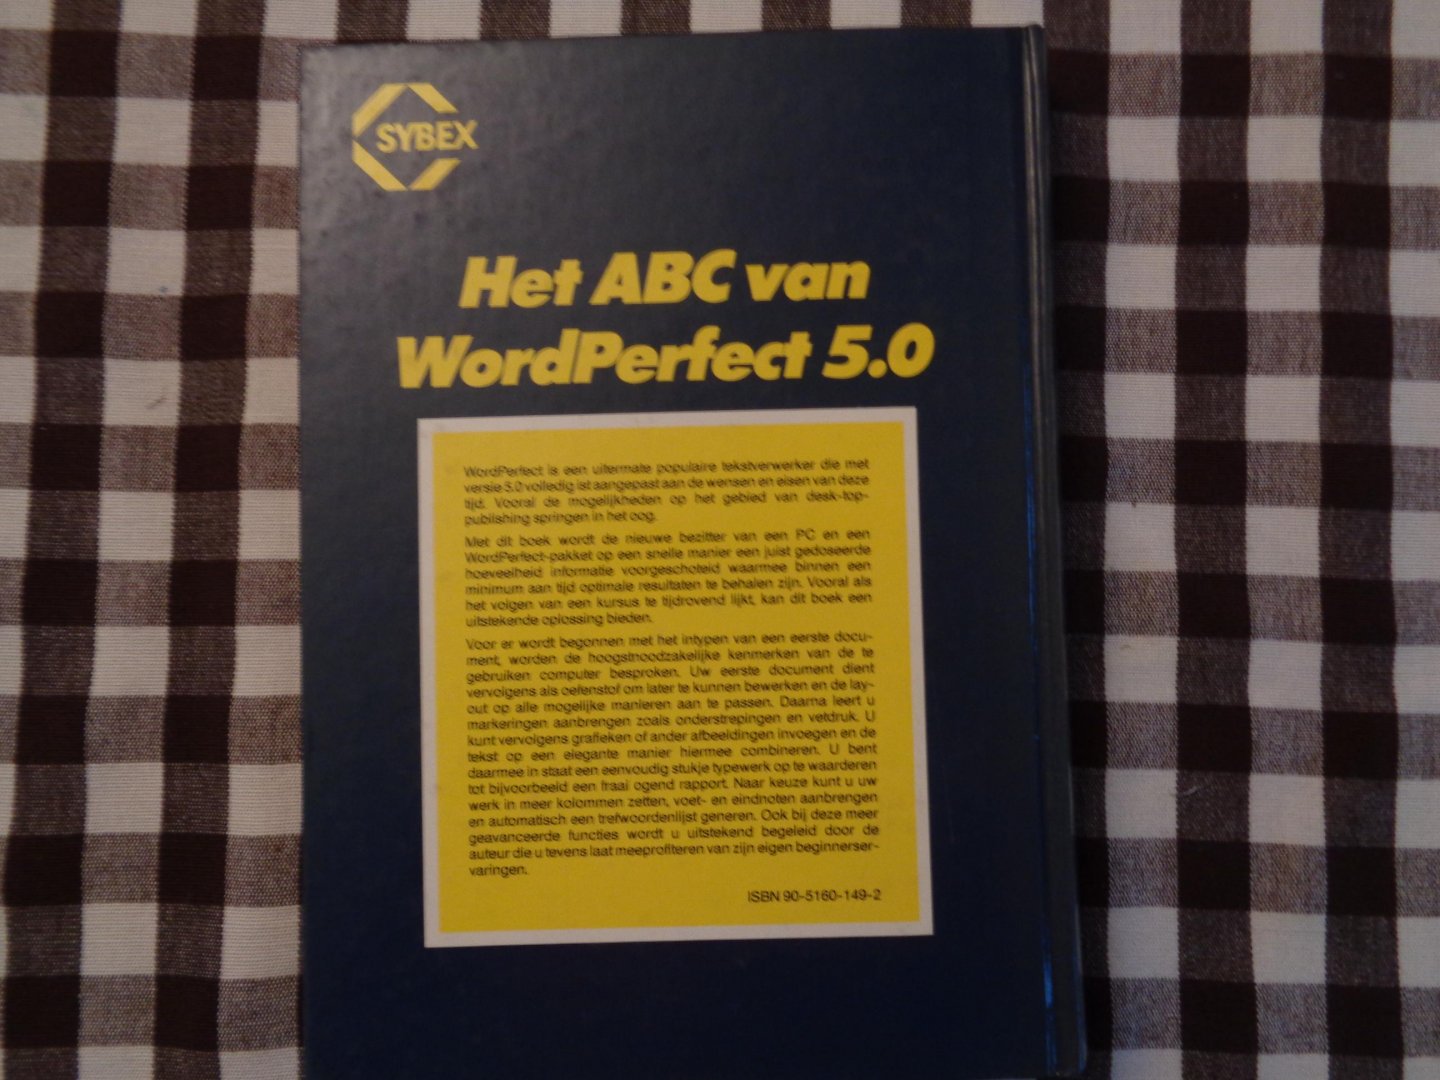 Neibauer - Abc van wordperfect 5.0 / druk 1